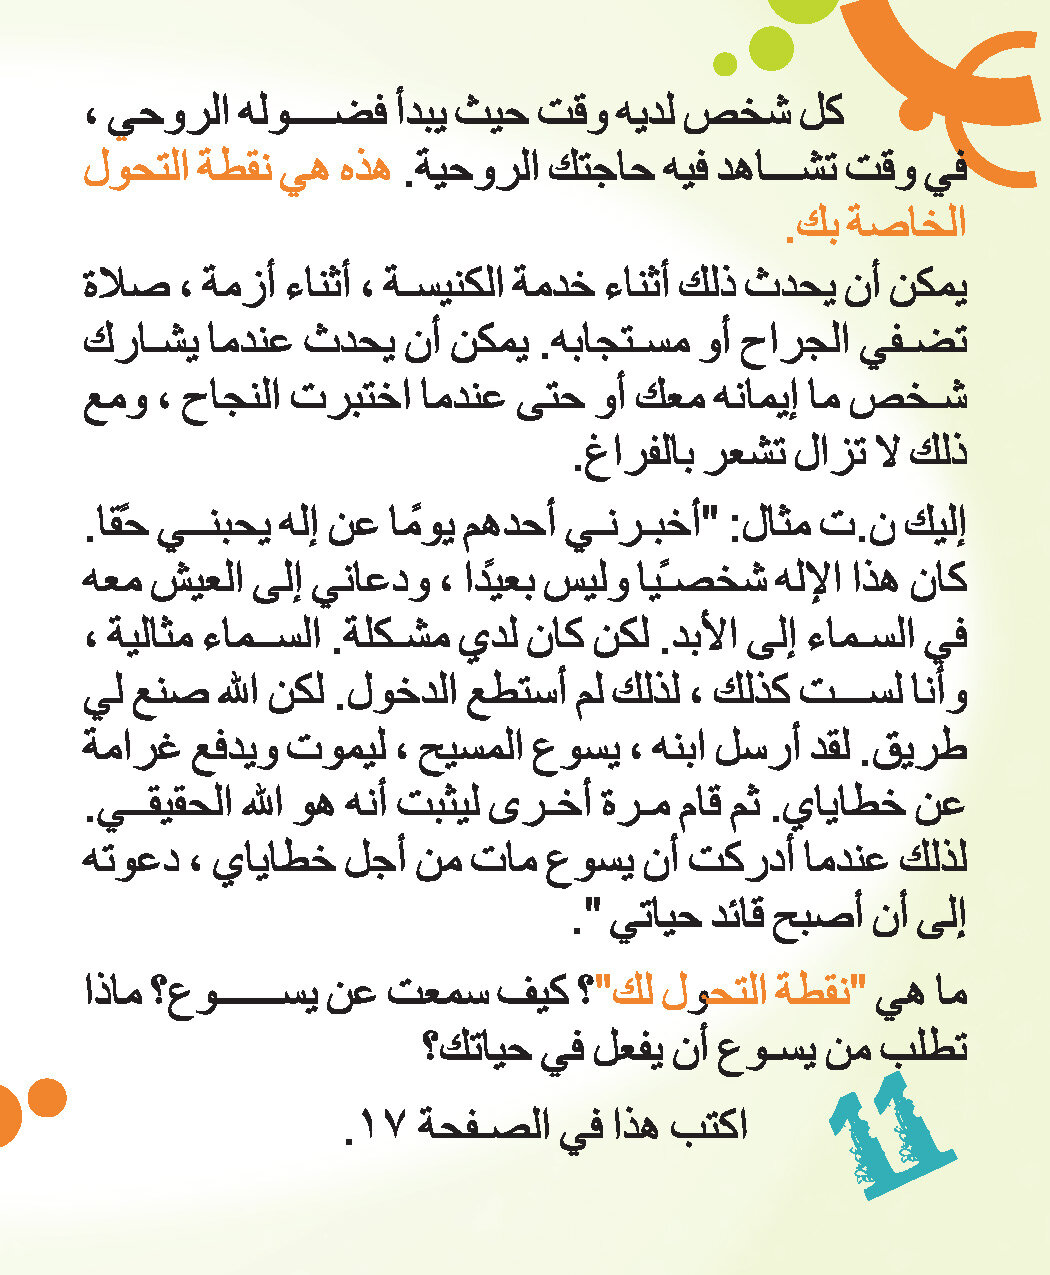 Arabic_Zubi_CDR-based_Page_11.jpg